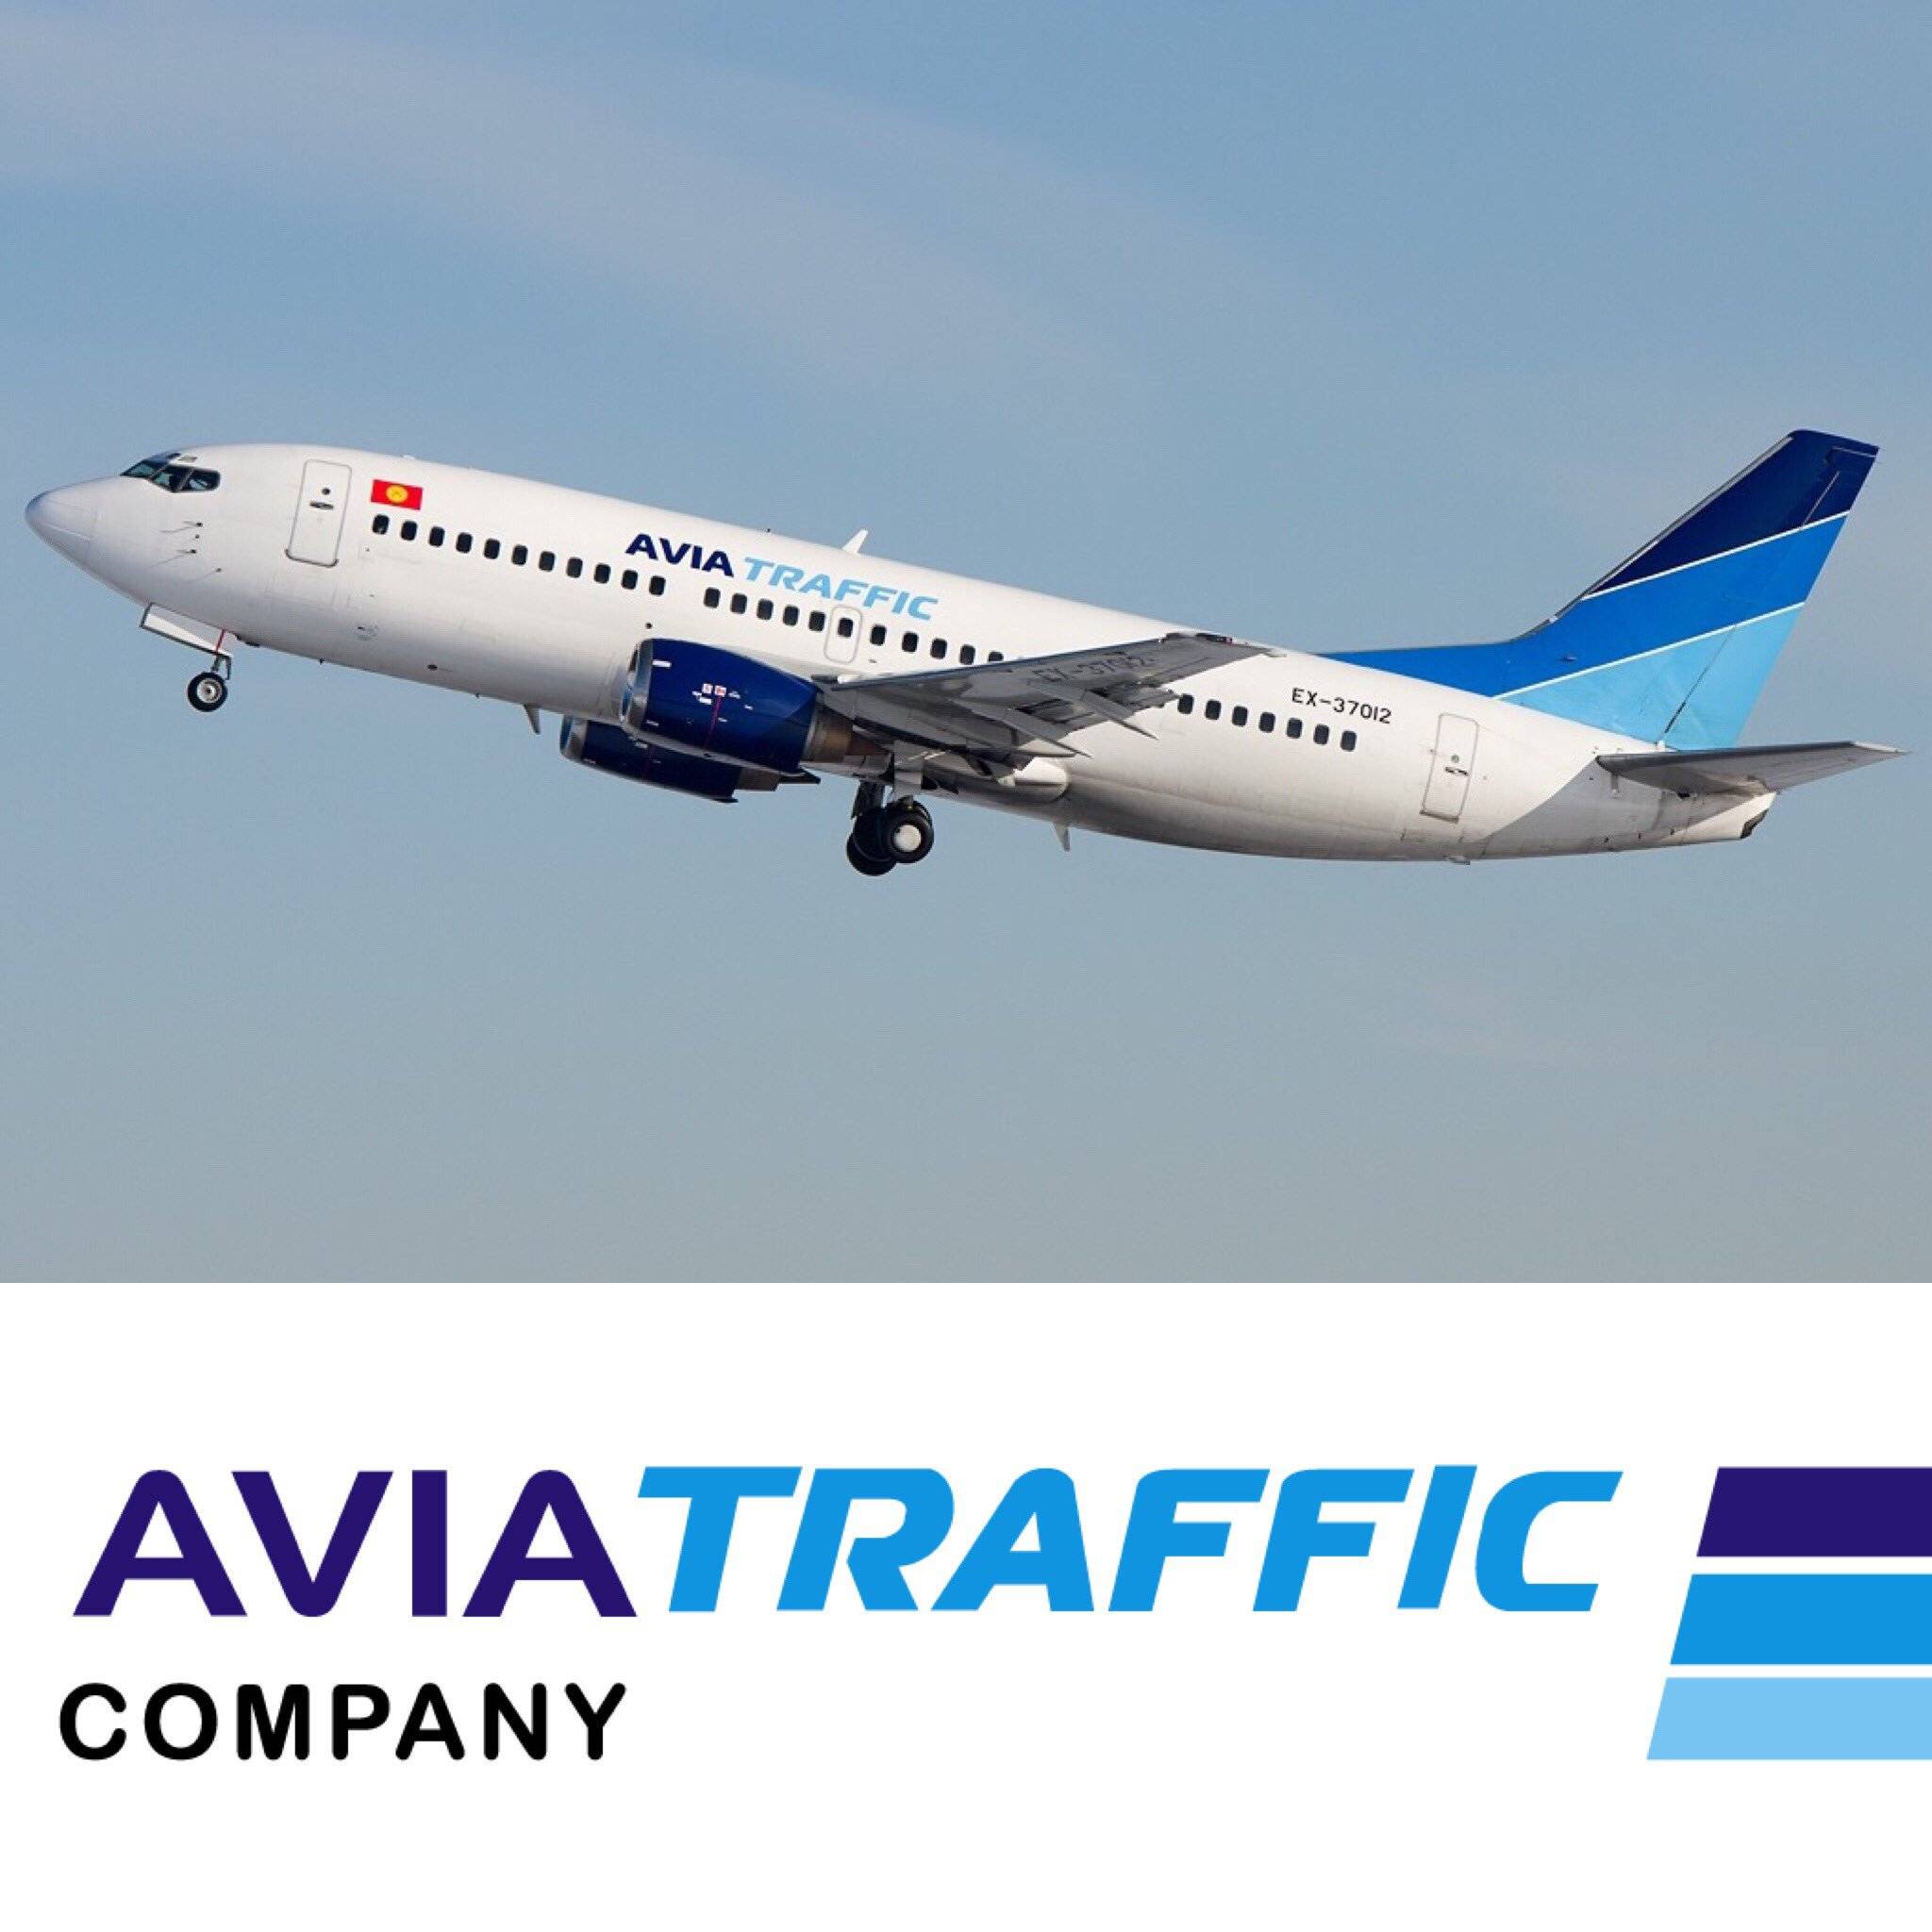 Все об официальном сайте авиакомпании avia traffic company (yk avj)